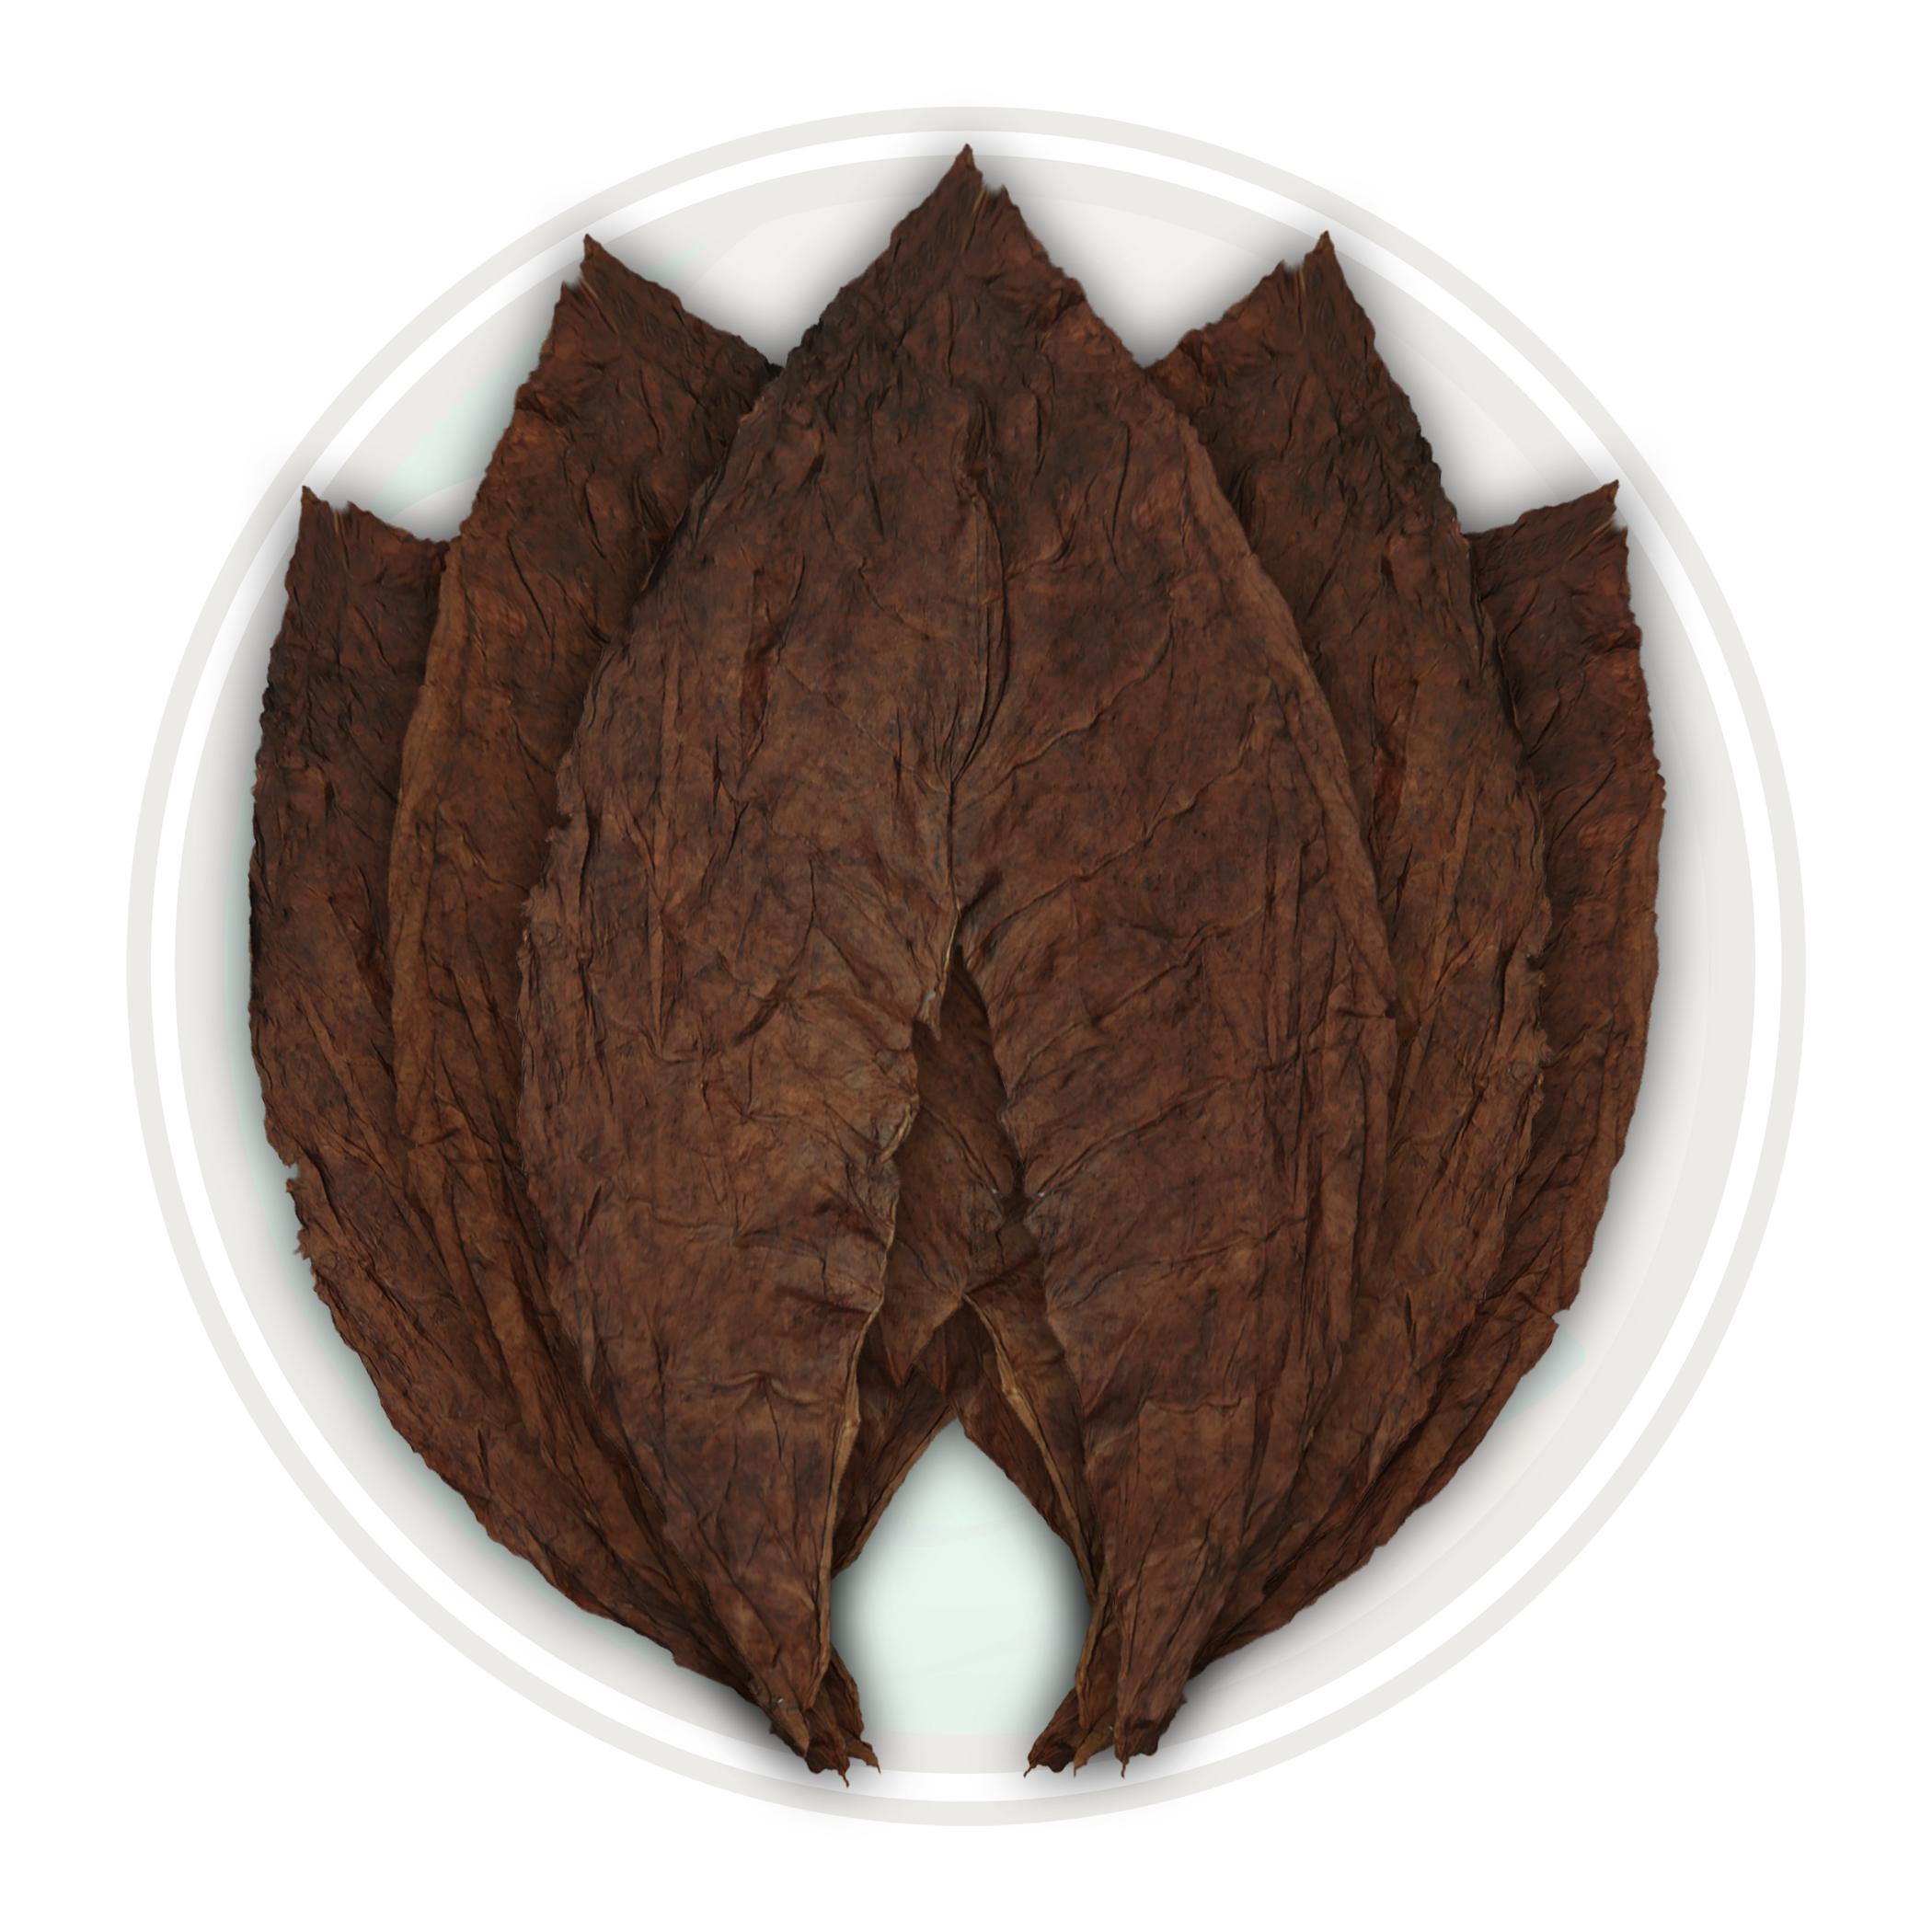 Dominican Ligero Criollo '98 Cigar Filler Tobacco Leaf